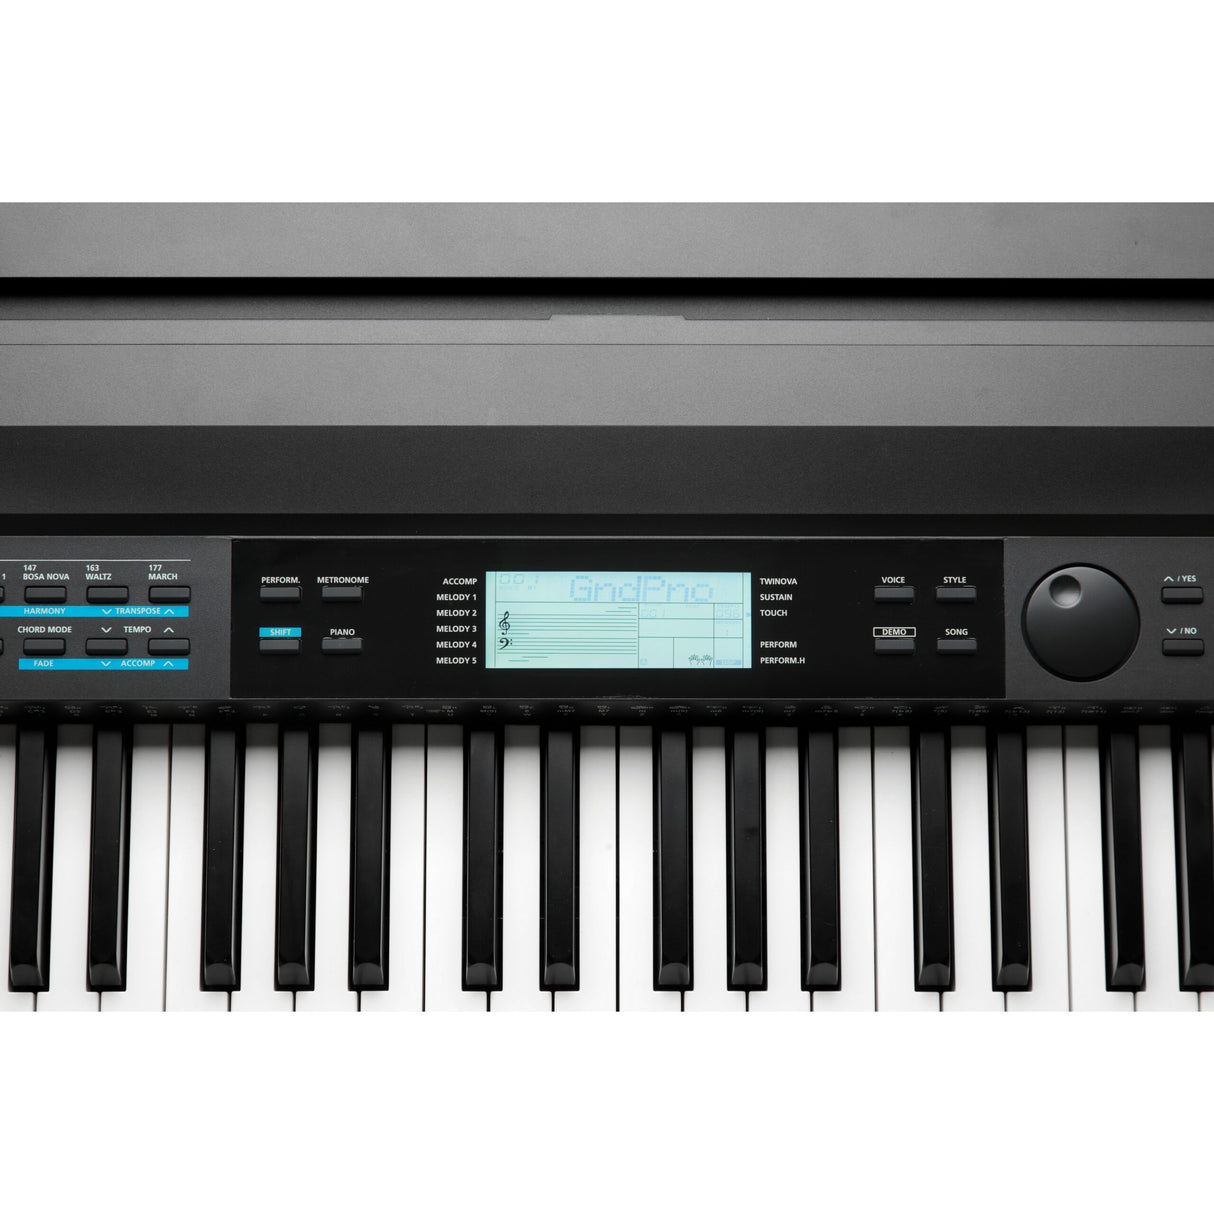 Kurzweil KA-120 88-Key Fully Weighted Portable Digital Piano